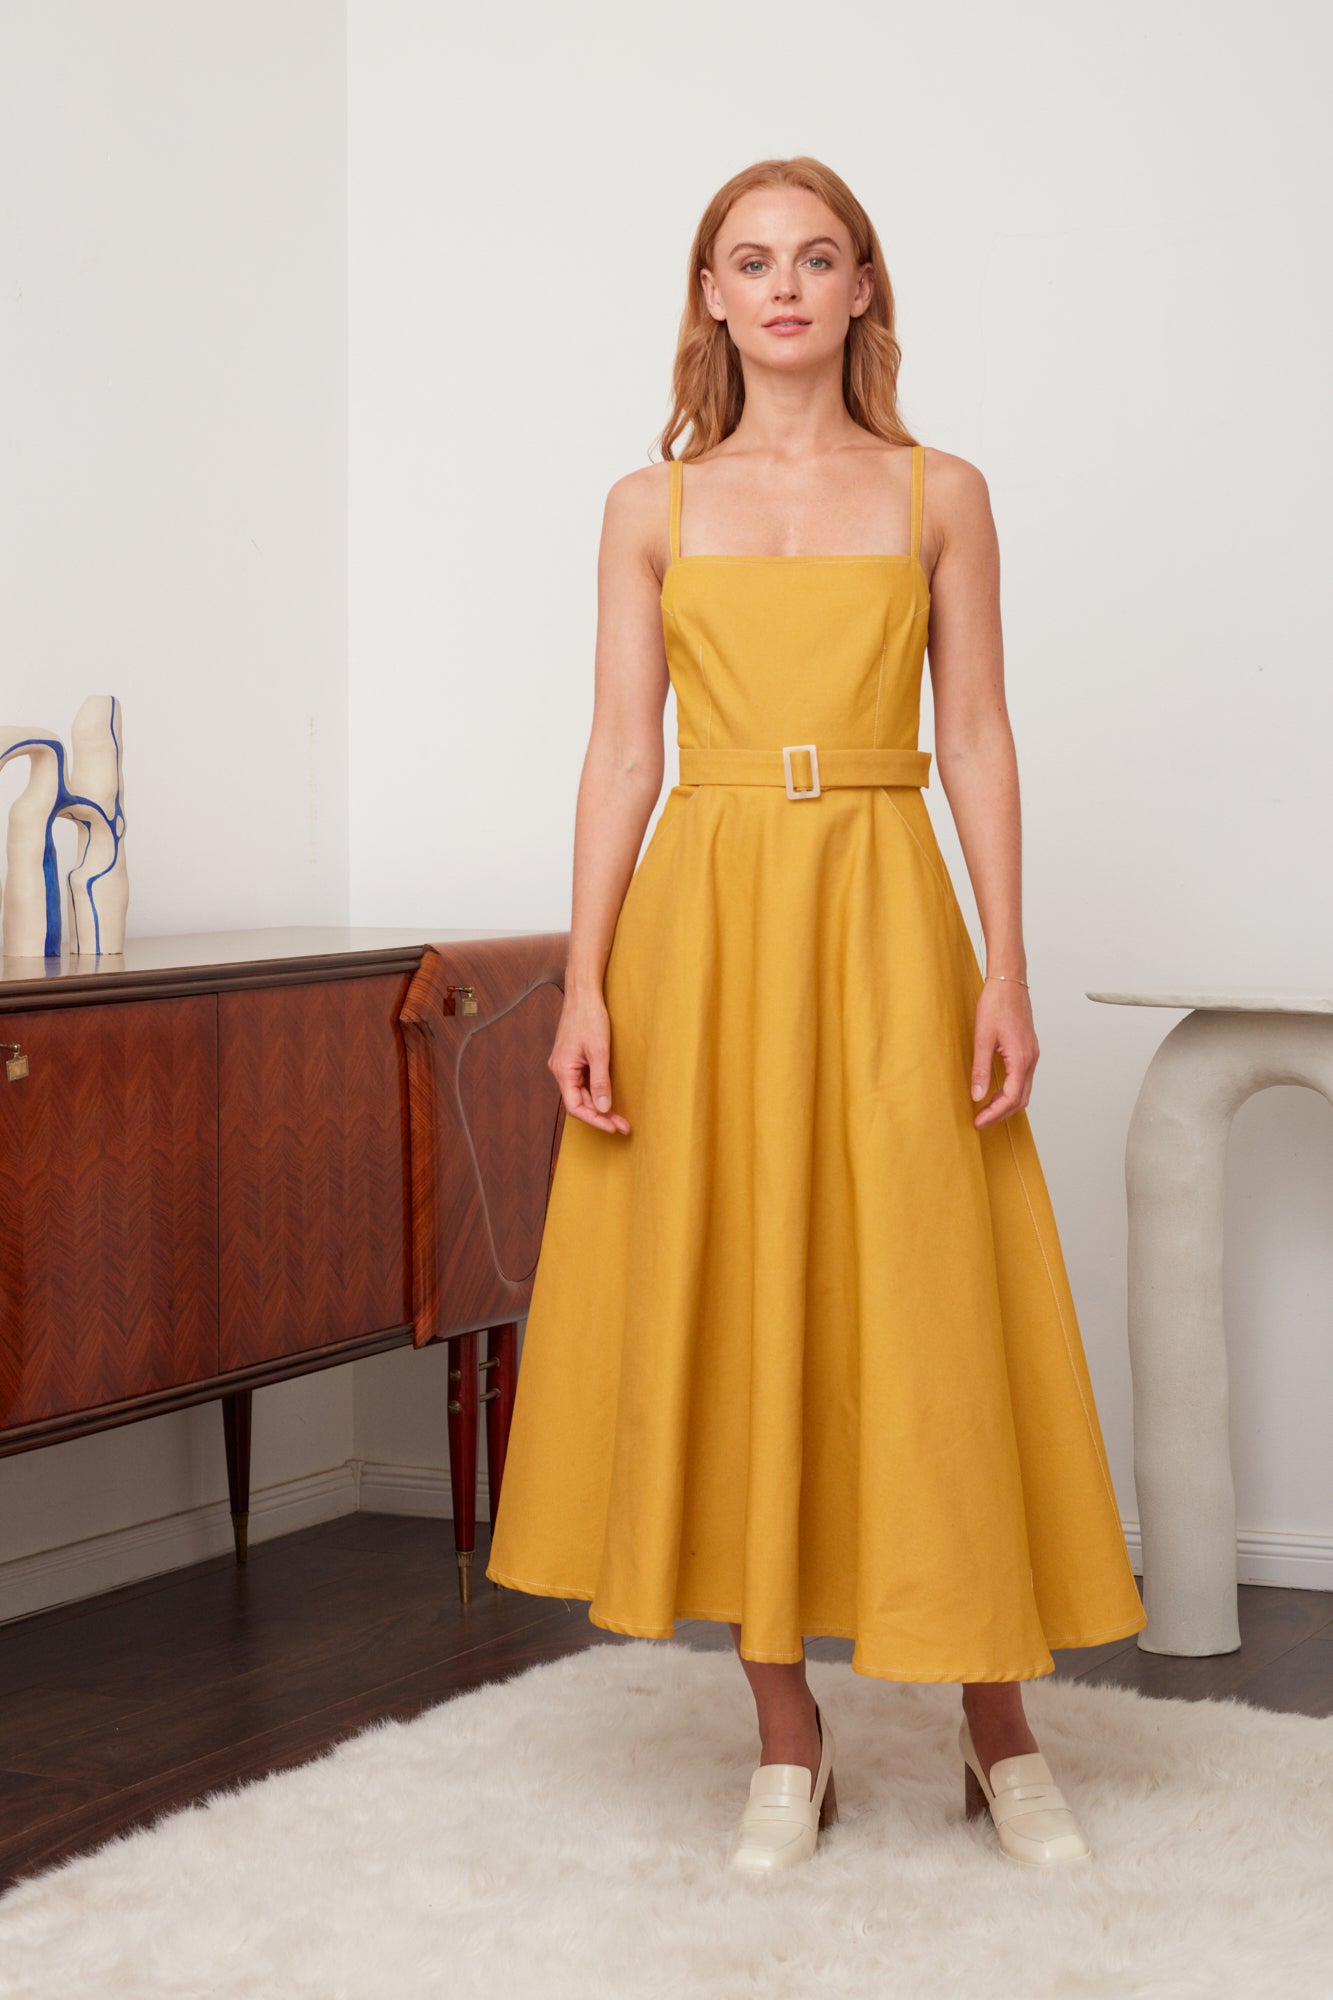 MATISSA Yellow Denim Circle Skirt Dress - Playful and Chic Style